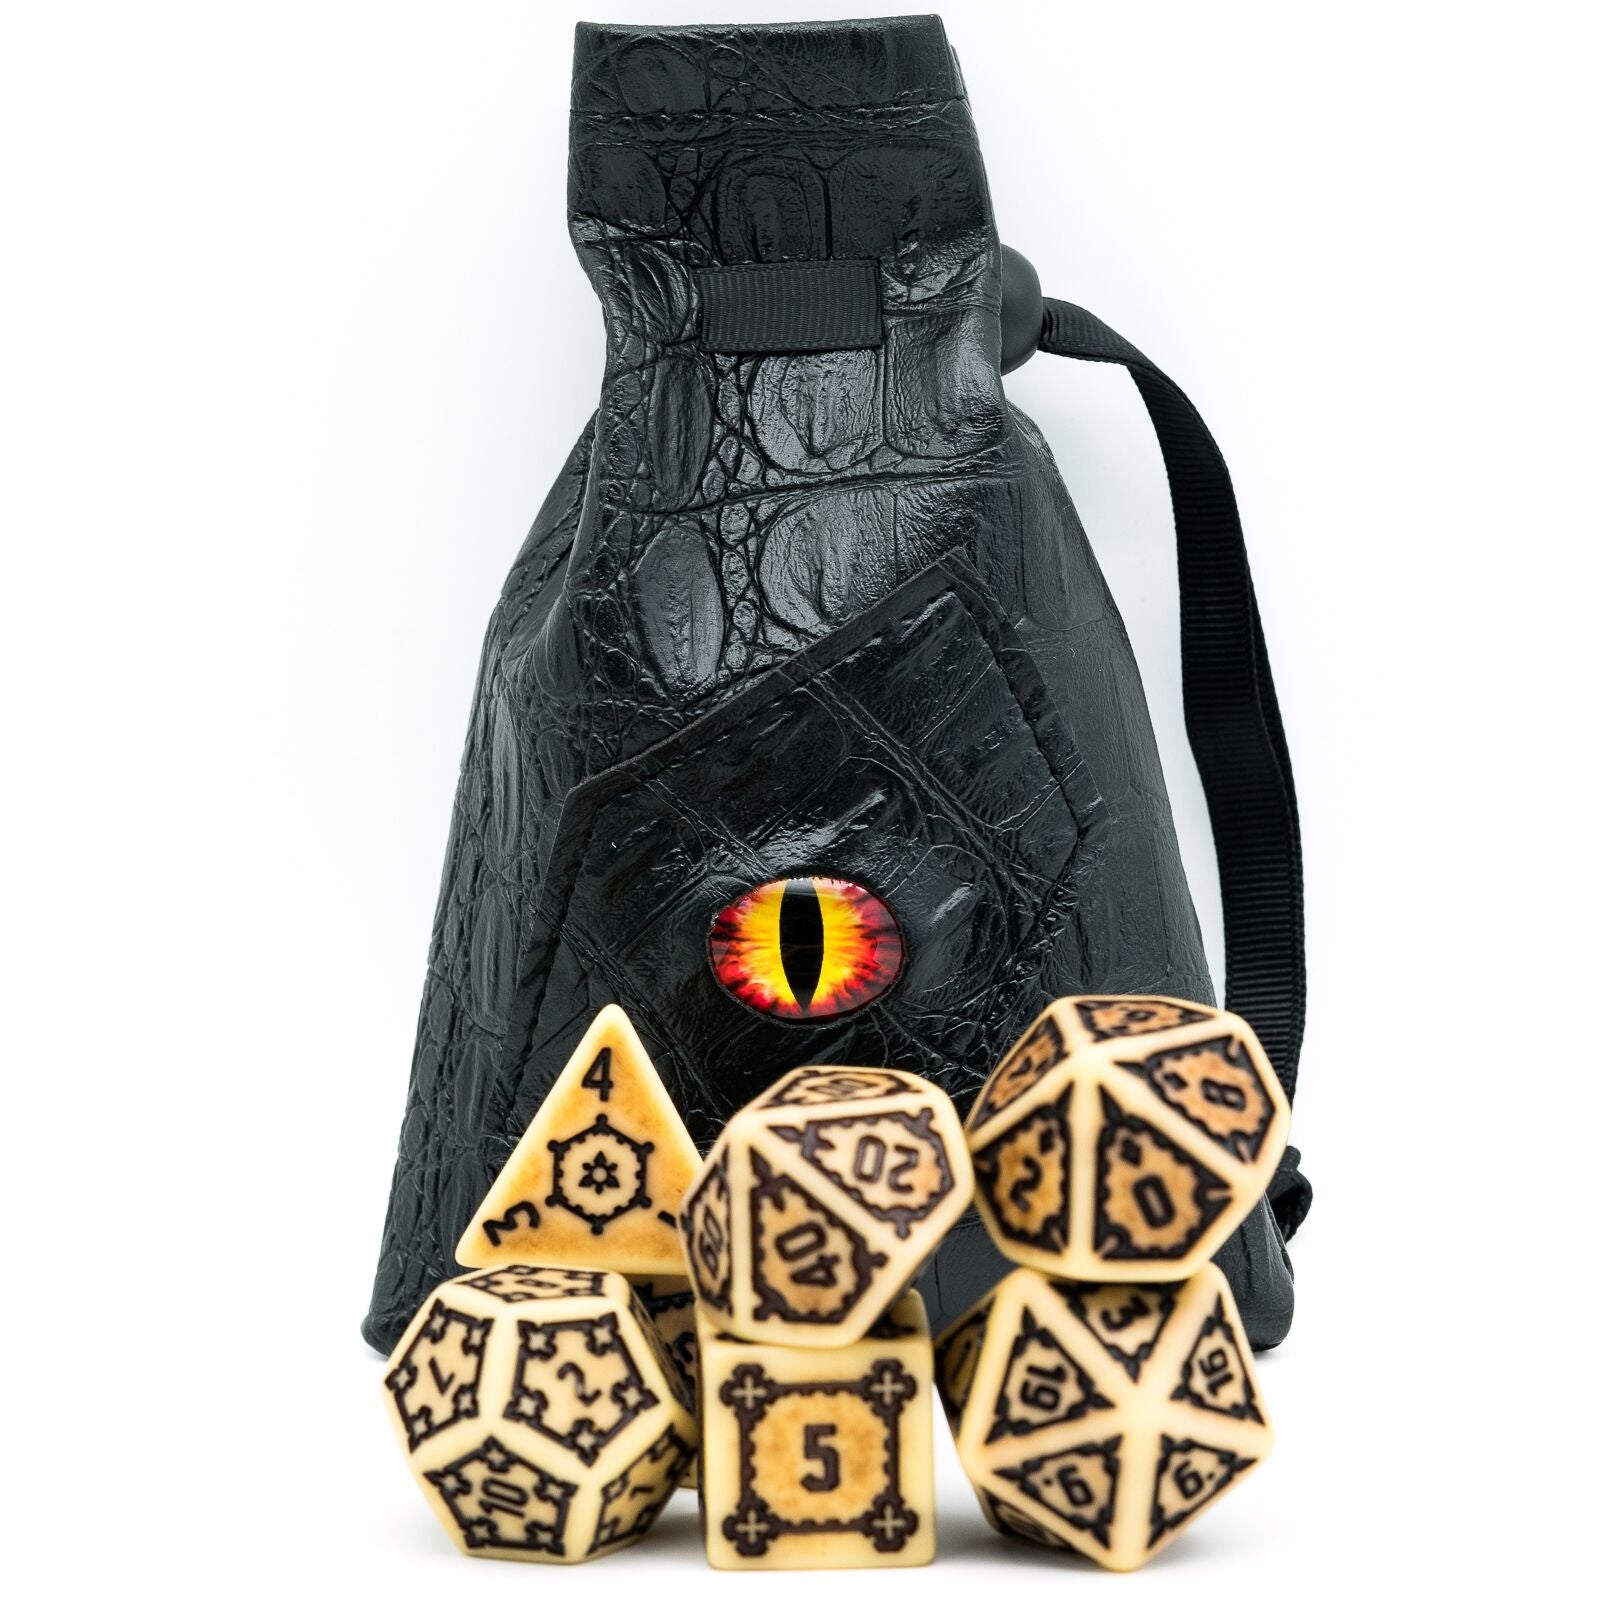 sandy elixir dice set in front of dragon eye carrying case